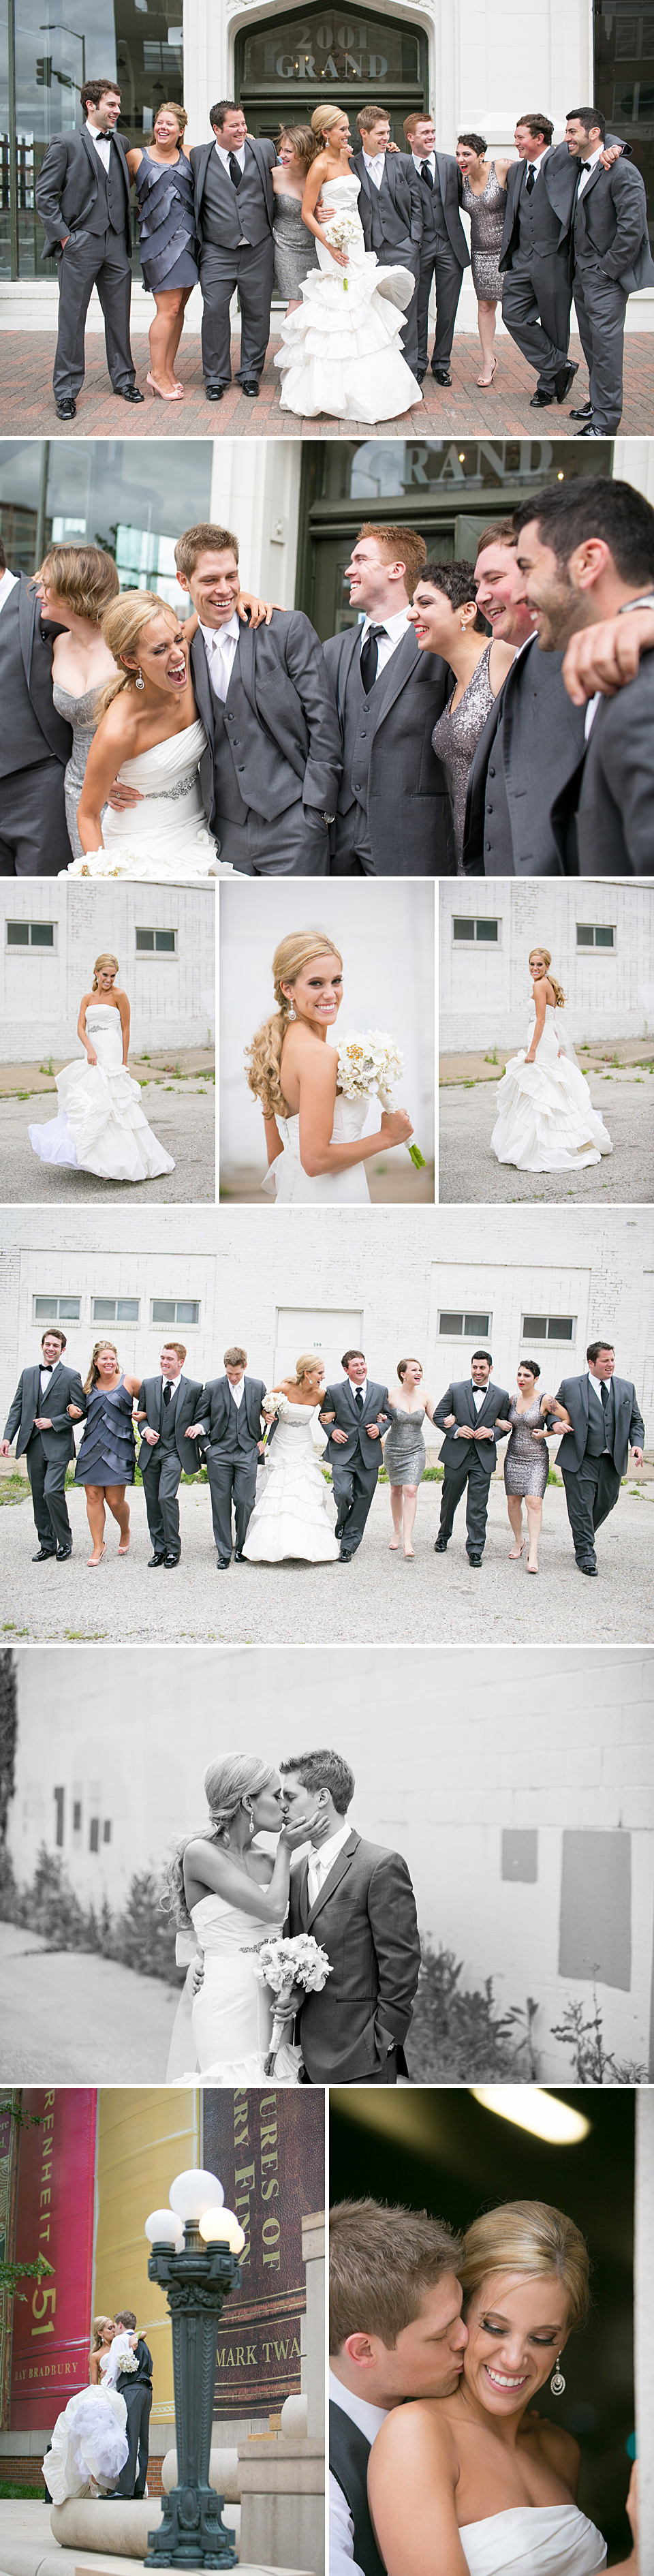 Unity temple Kansas City, midwest weddings, Jana Marie Photography, Bridal portraits, couples